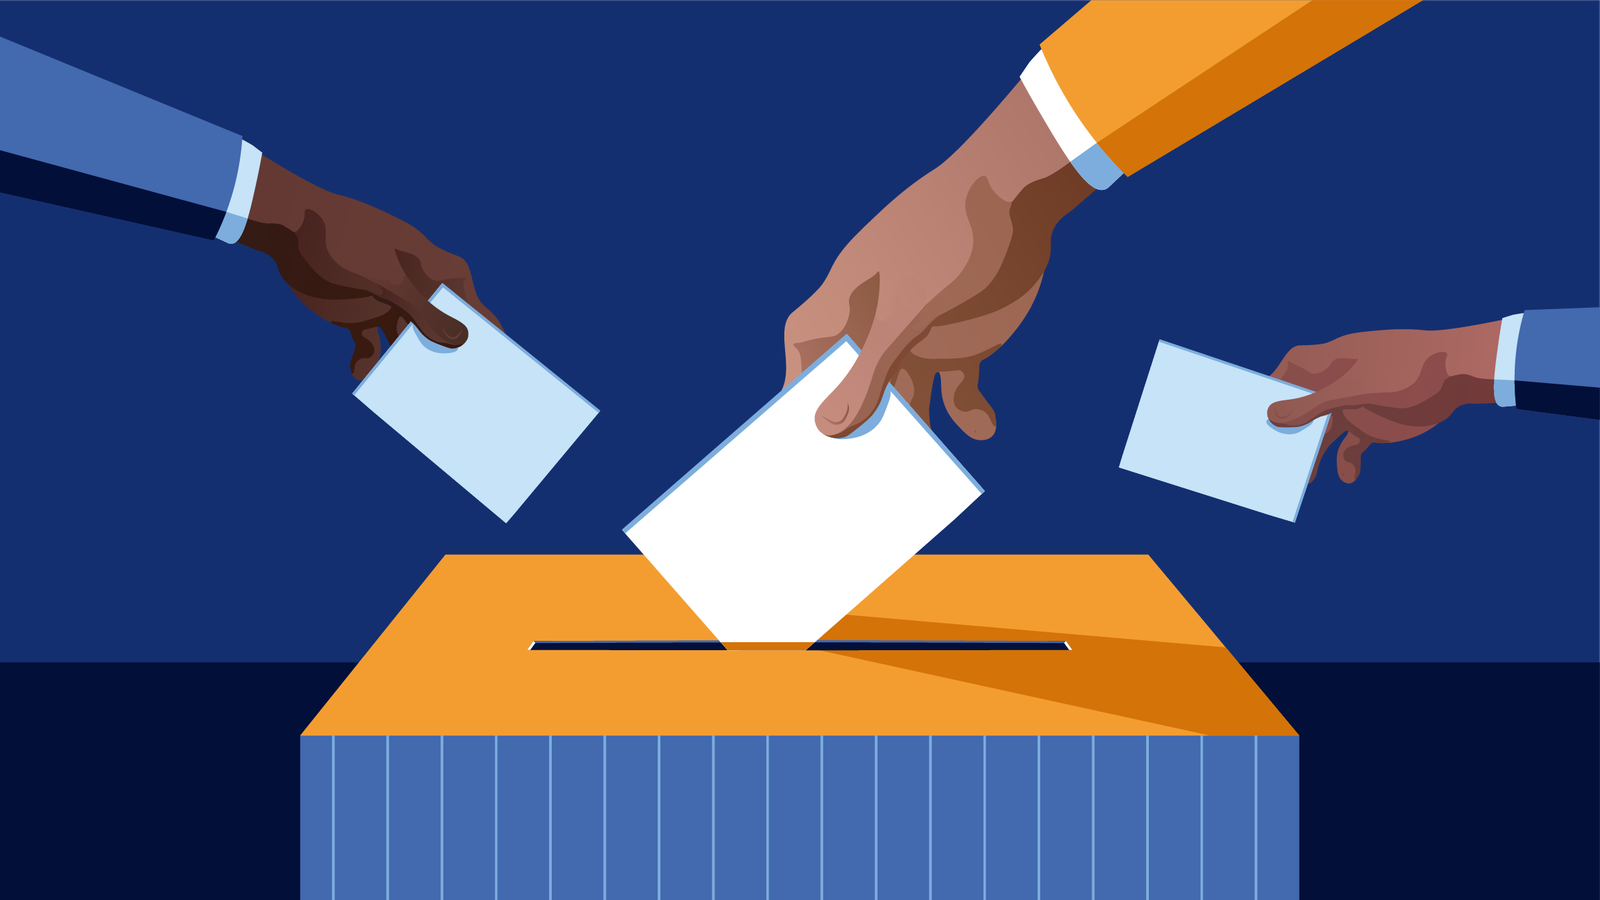 Illustration depicting three hands casting ballots into a central ballot box.